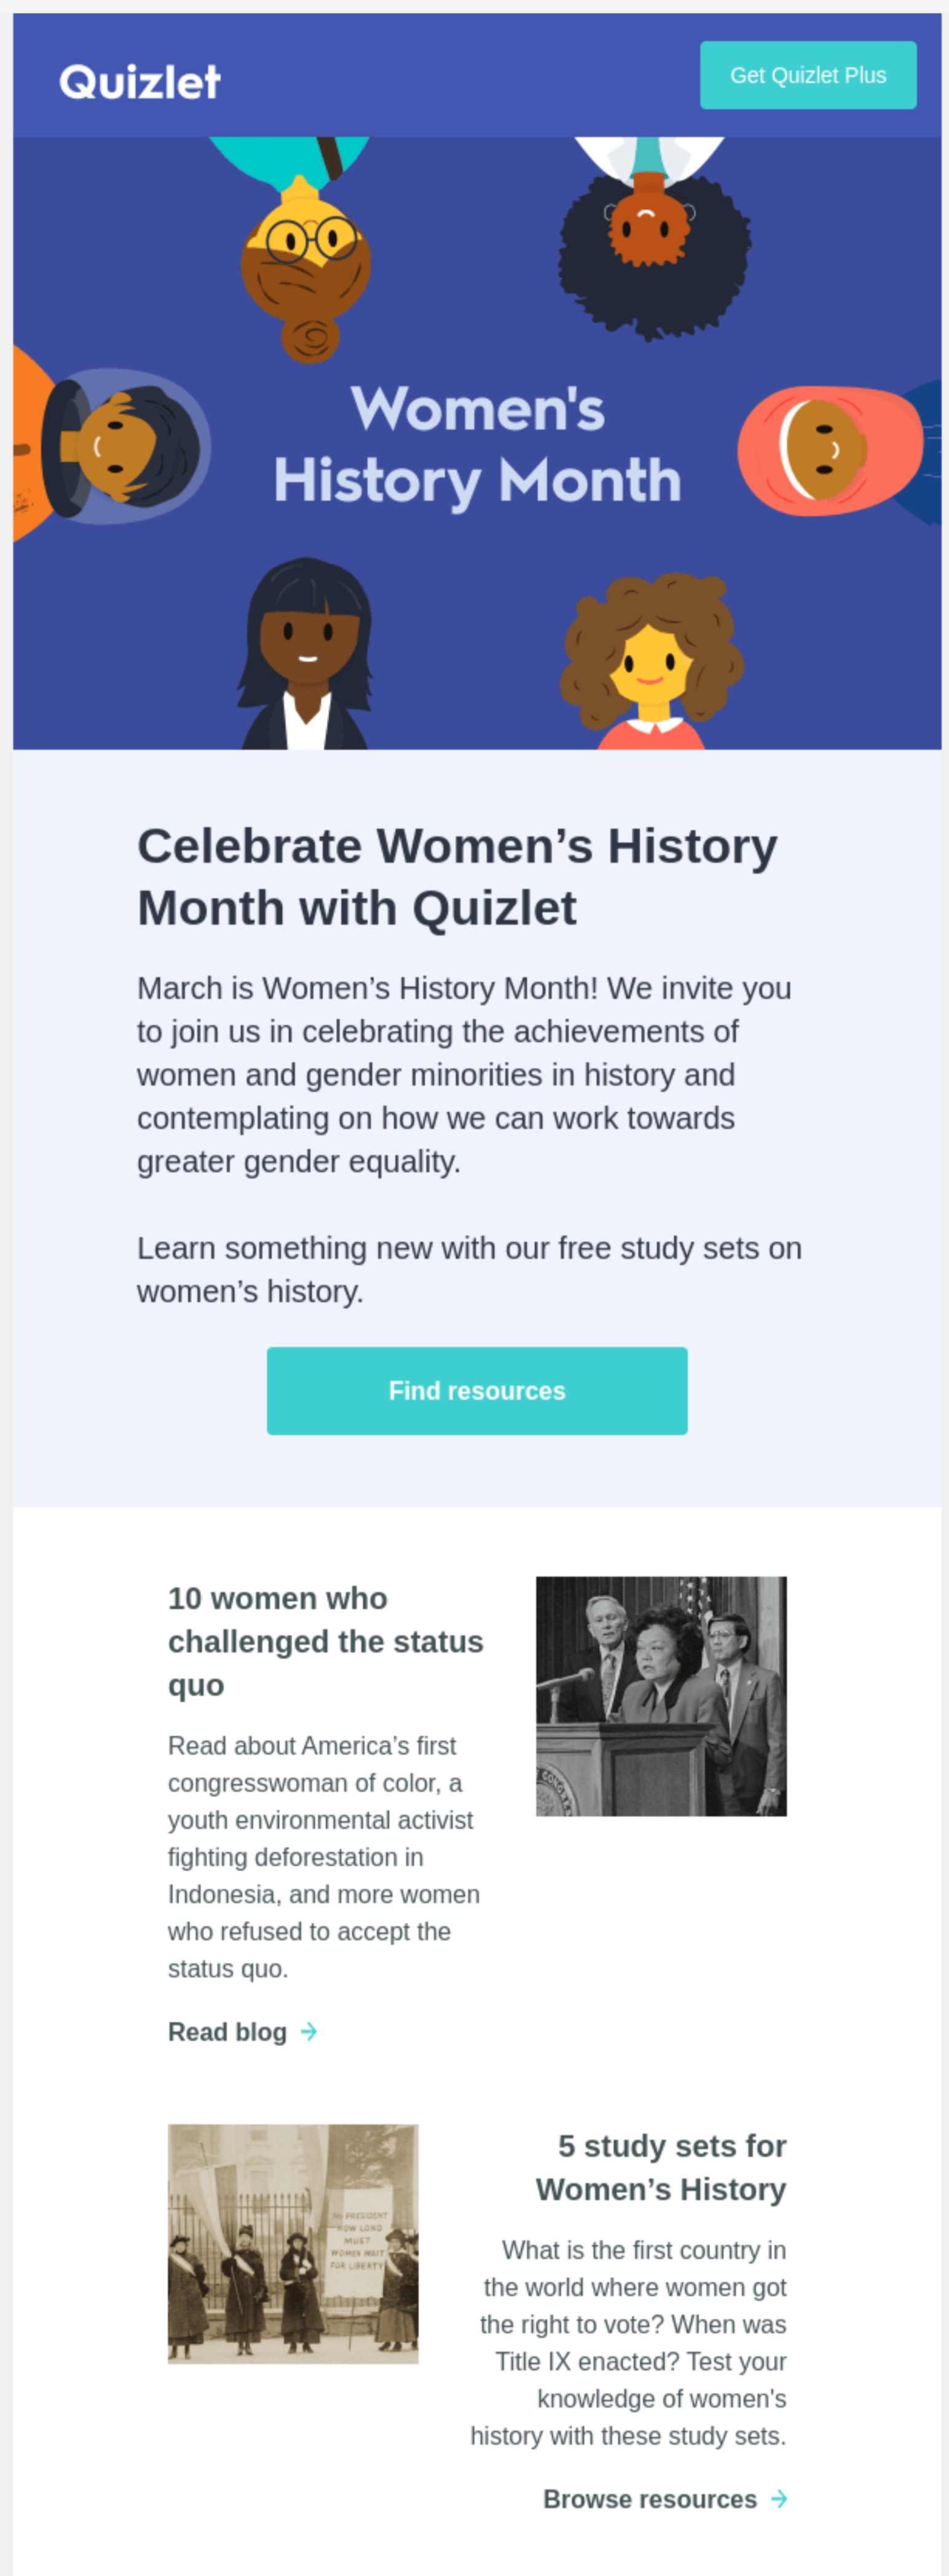 Quizlet Provides Women's History Study Sets